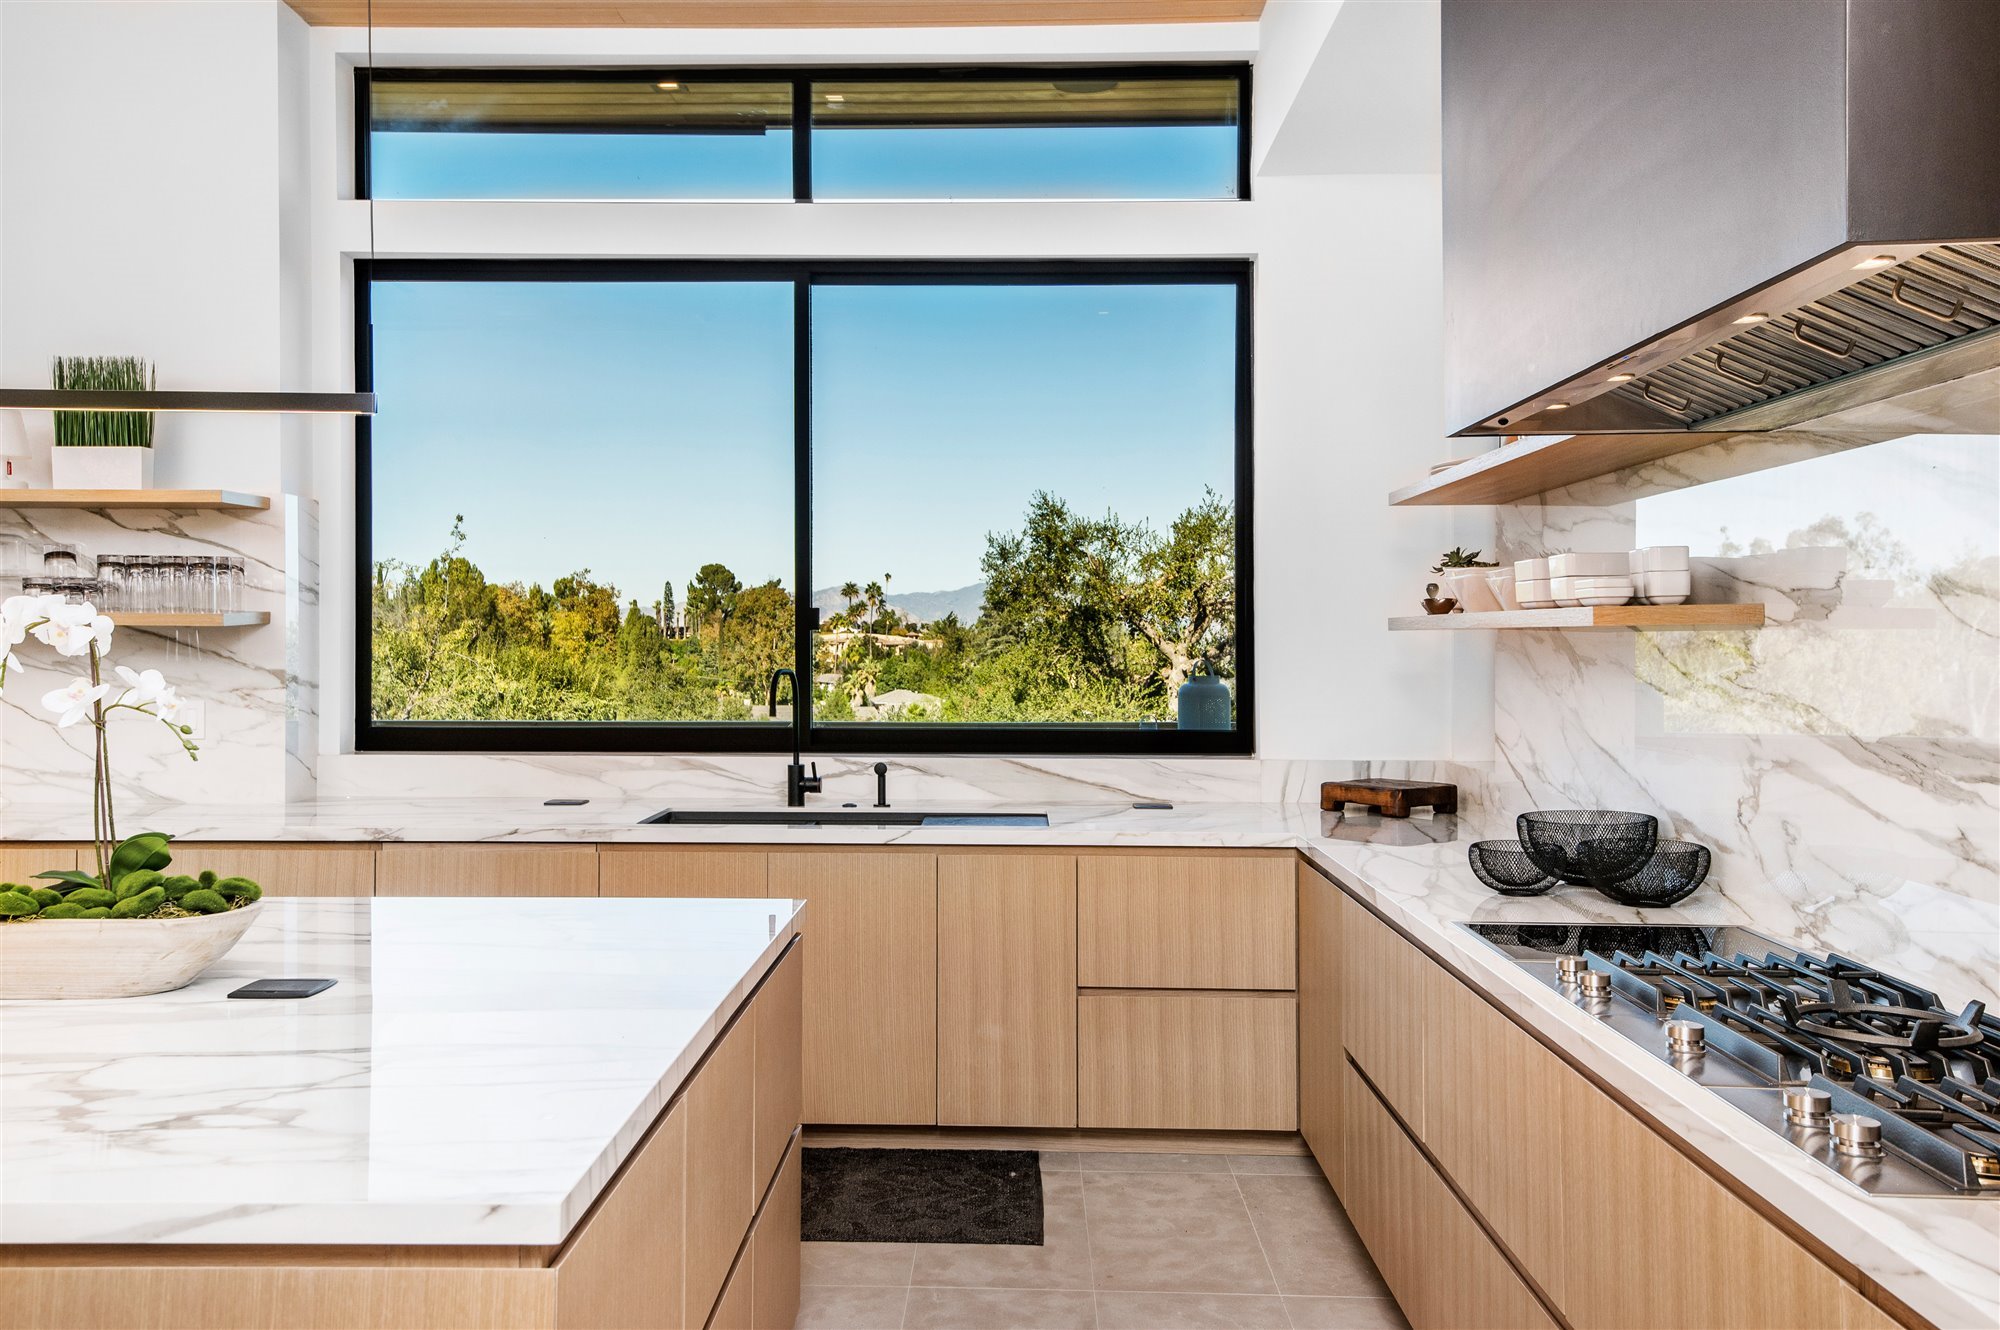 Casa moderna del actor de Modern Family Jesse Tyler Ferguson en Encino los Angeles cocina